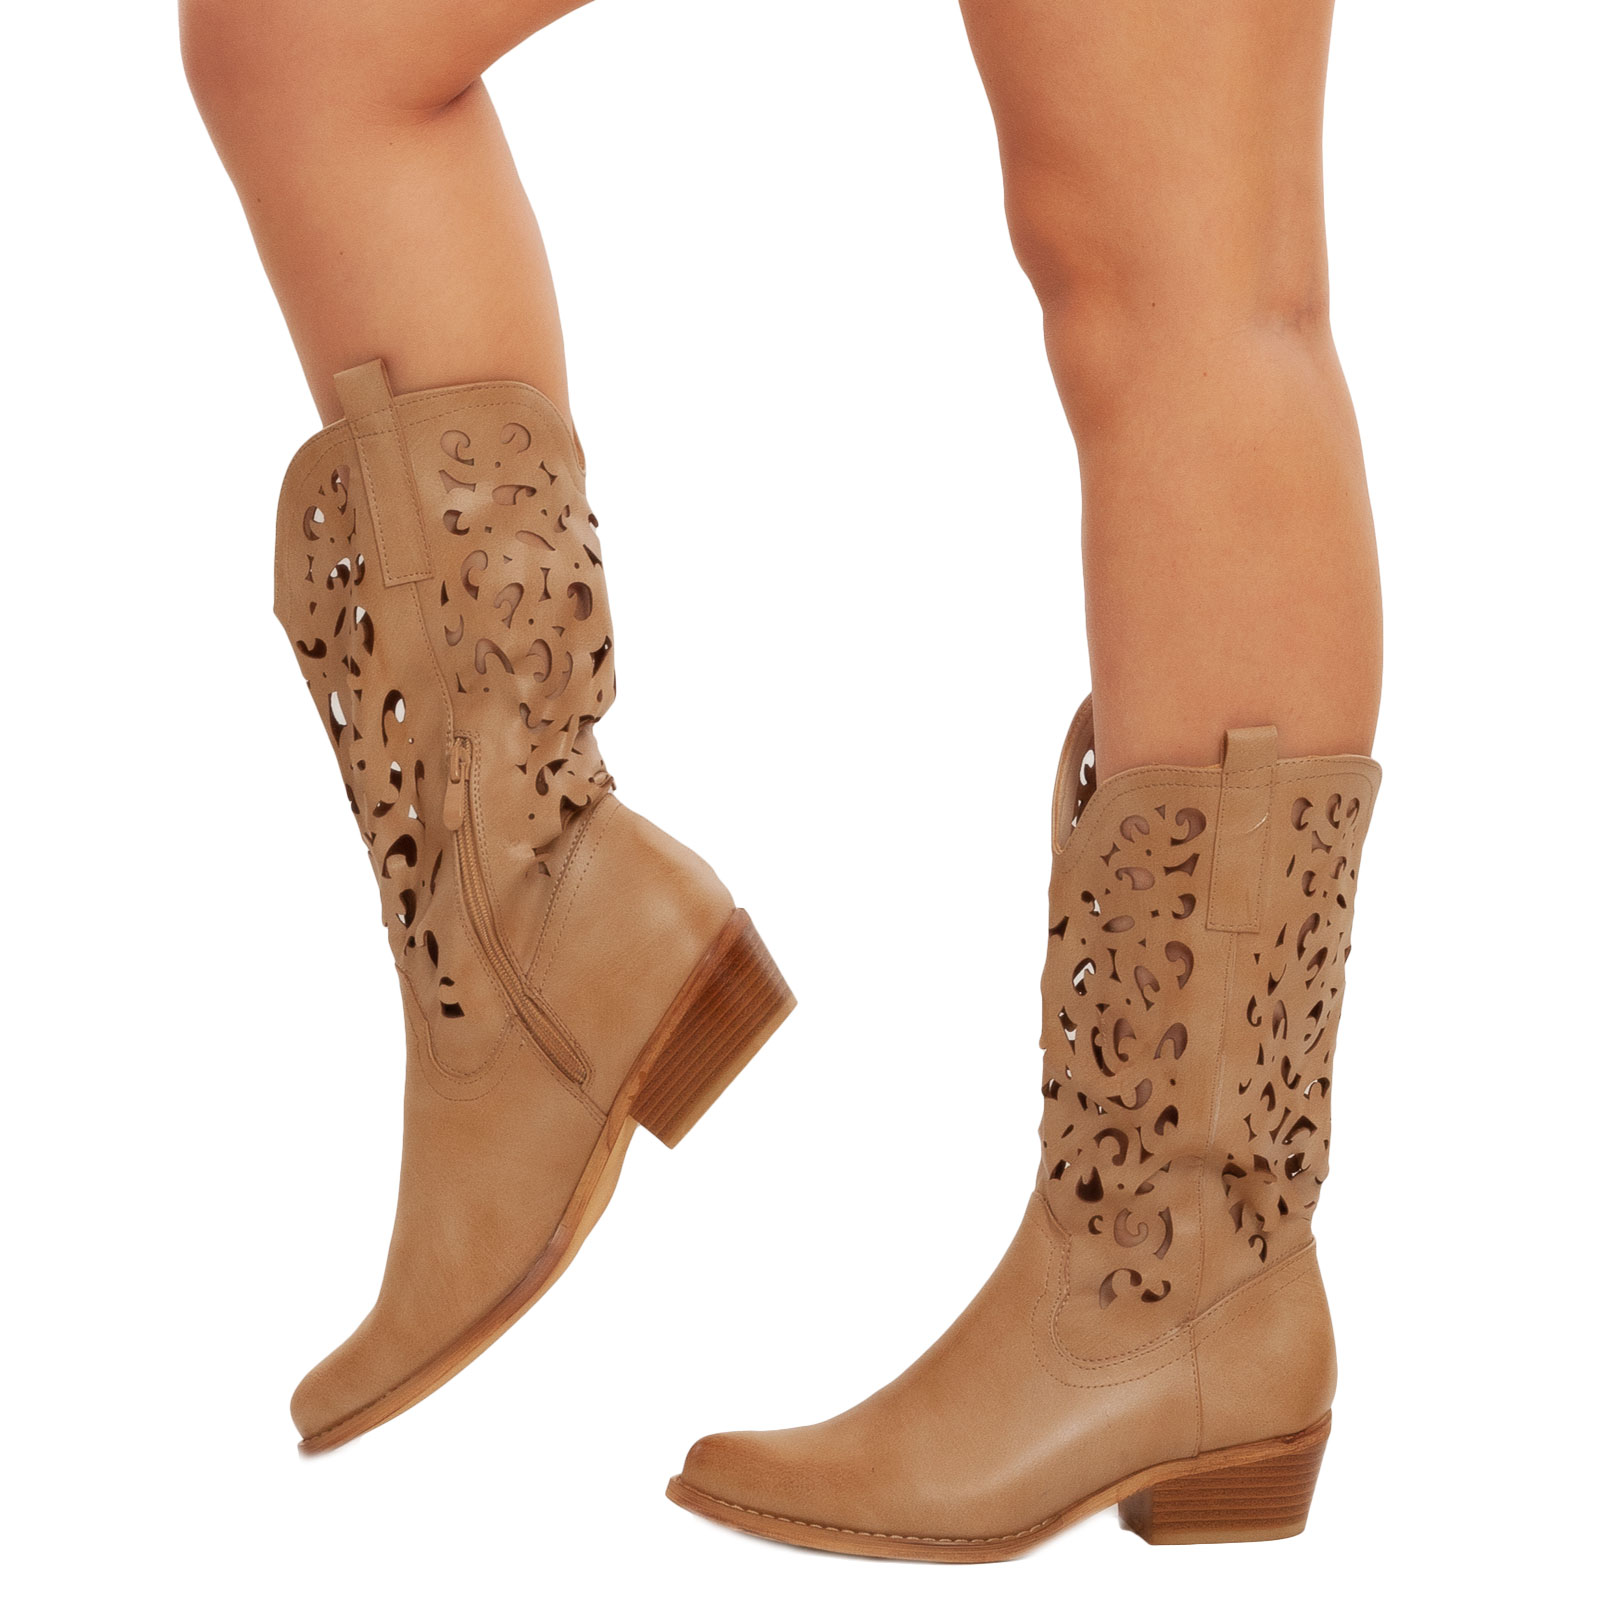 essay Advanced Consultation stivali donna estivi stivaletti texani camperos scarpe traforati TOOCOOL  G629 | eBay